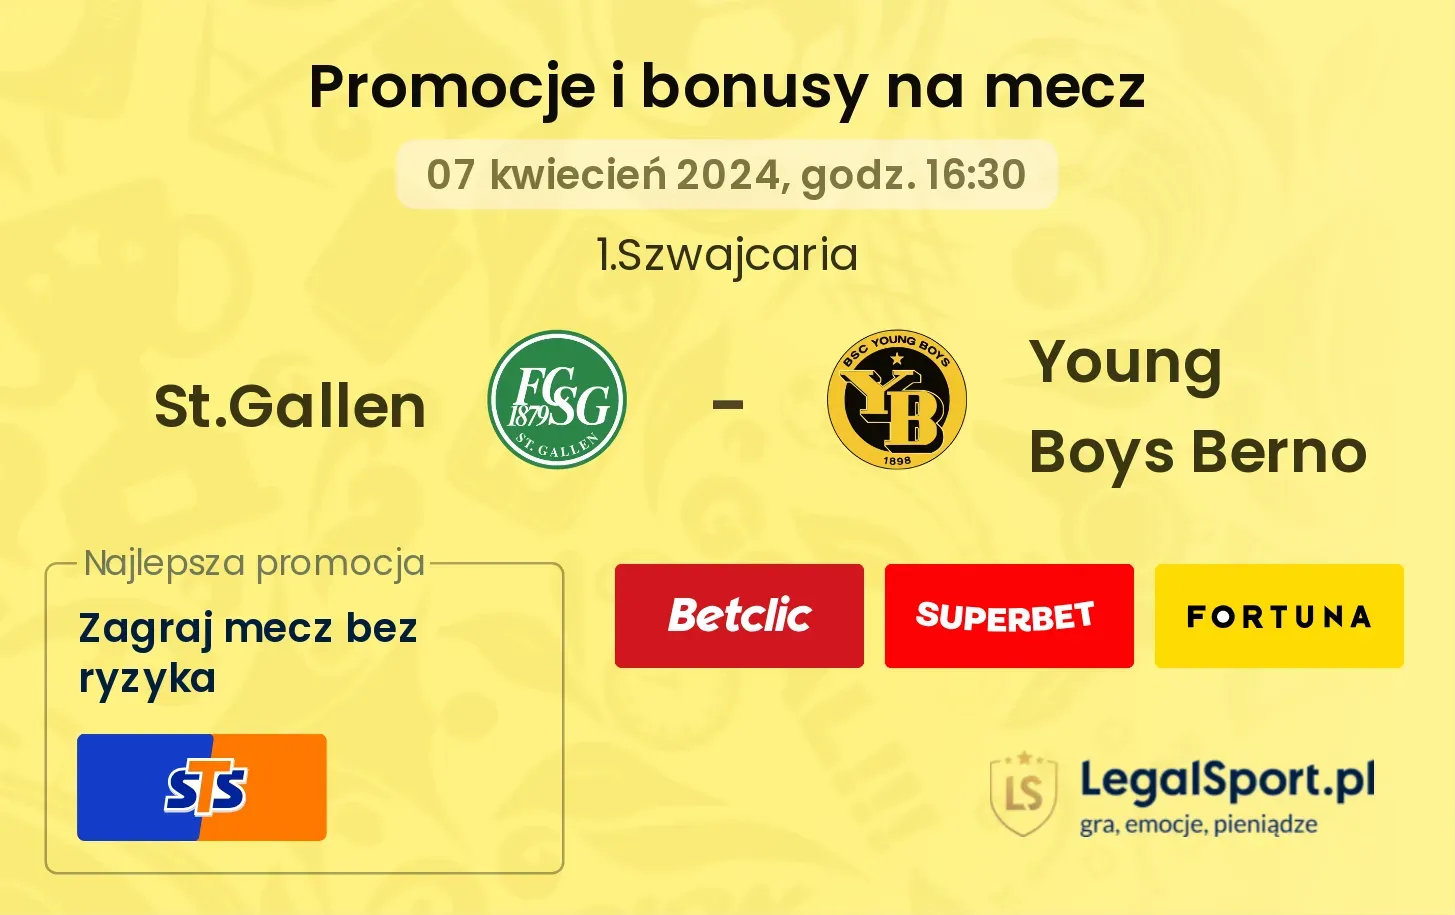 St.Gallen - Young Boys Berno bonusy i promocje (07.04, 16:30)